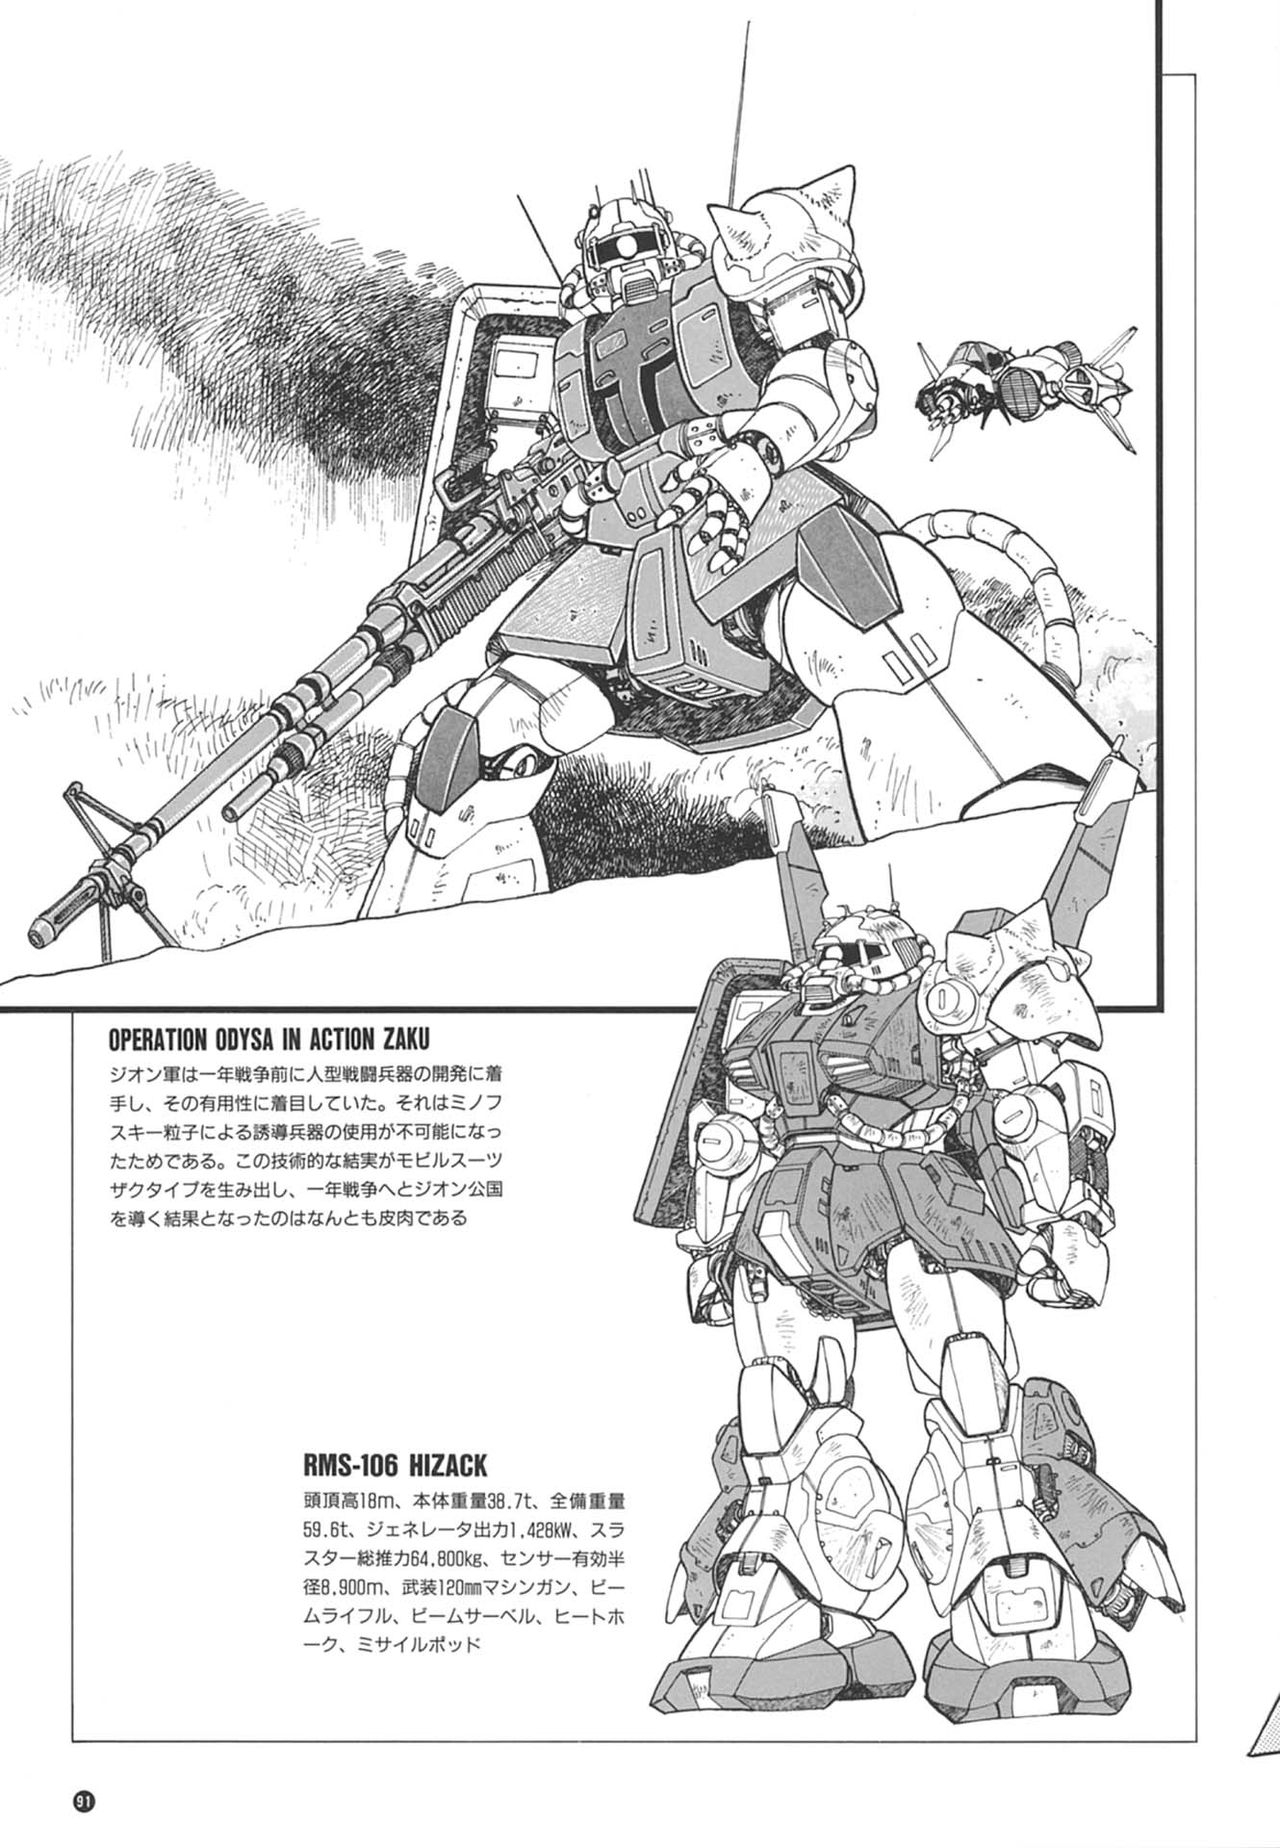 [Kazuhisa Kondo] Kazuhisa Kondo 2D & 3D Works - Go Ahead - From Mobile Suit Gundam to Original Mechanism 90